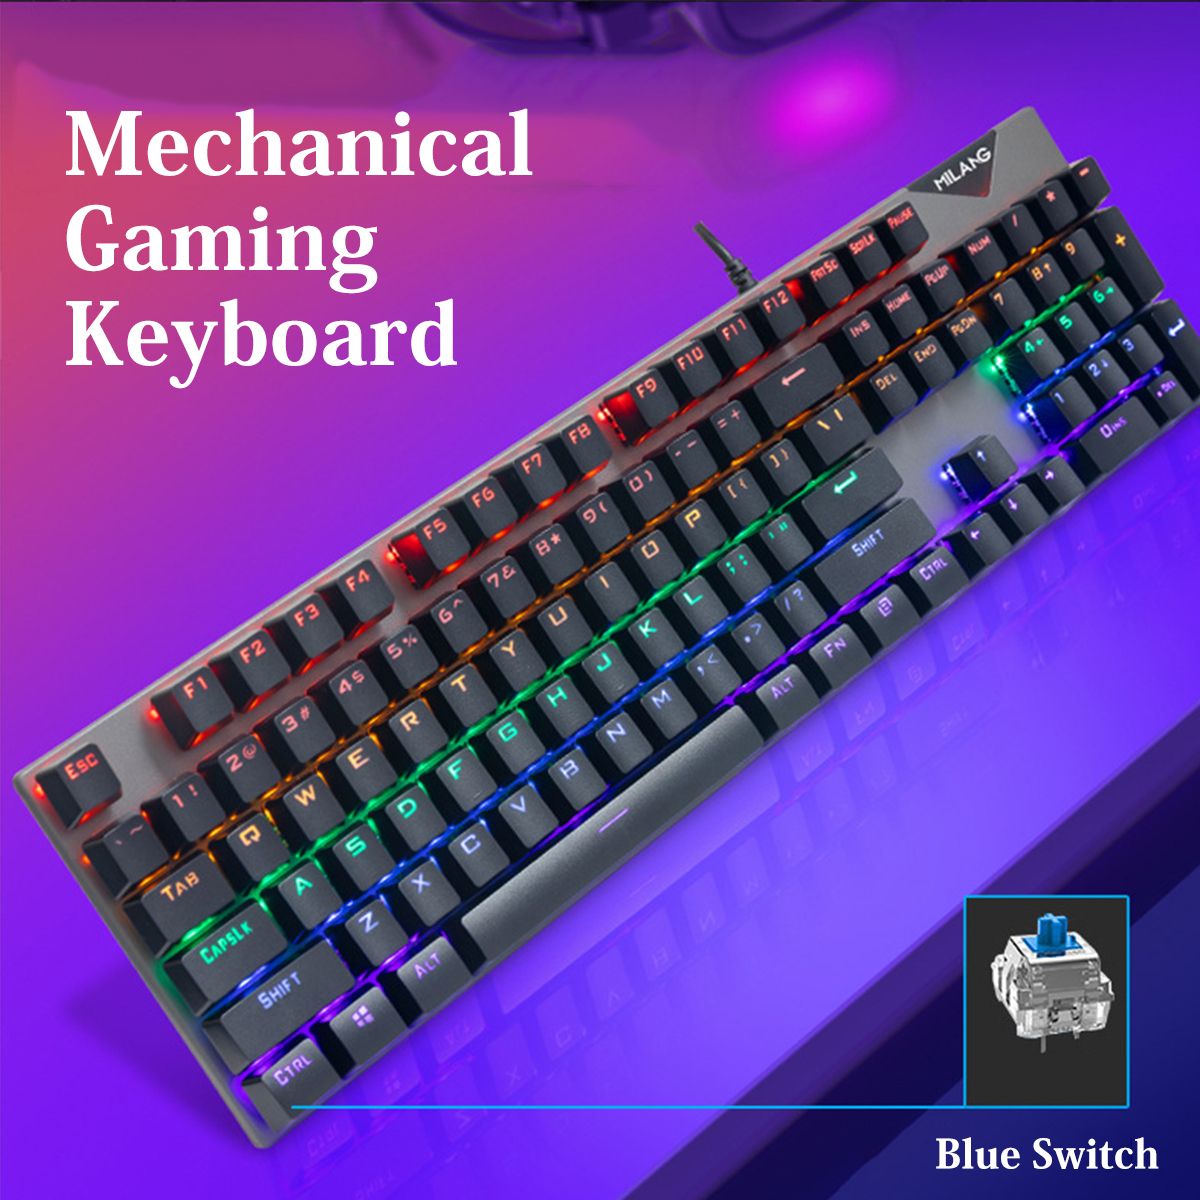 MILANG-K8-104-Keys-Wired-Mechanical-Keyboard-Blue-Switch-Metal-Panel-22-Backlight-Effects-Gaming-Key-1747738